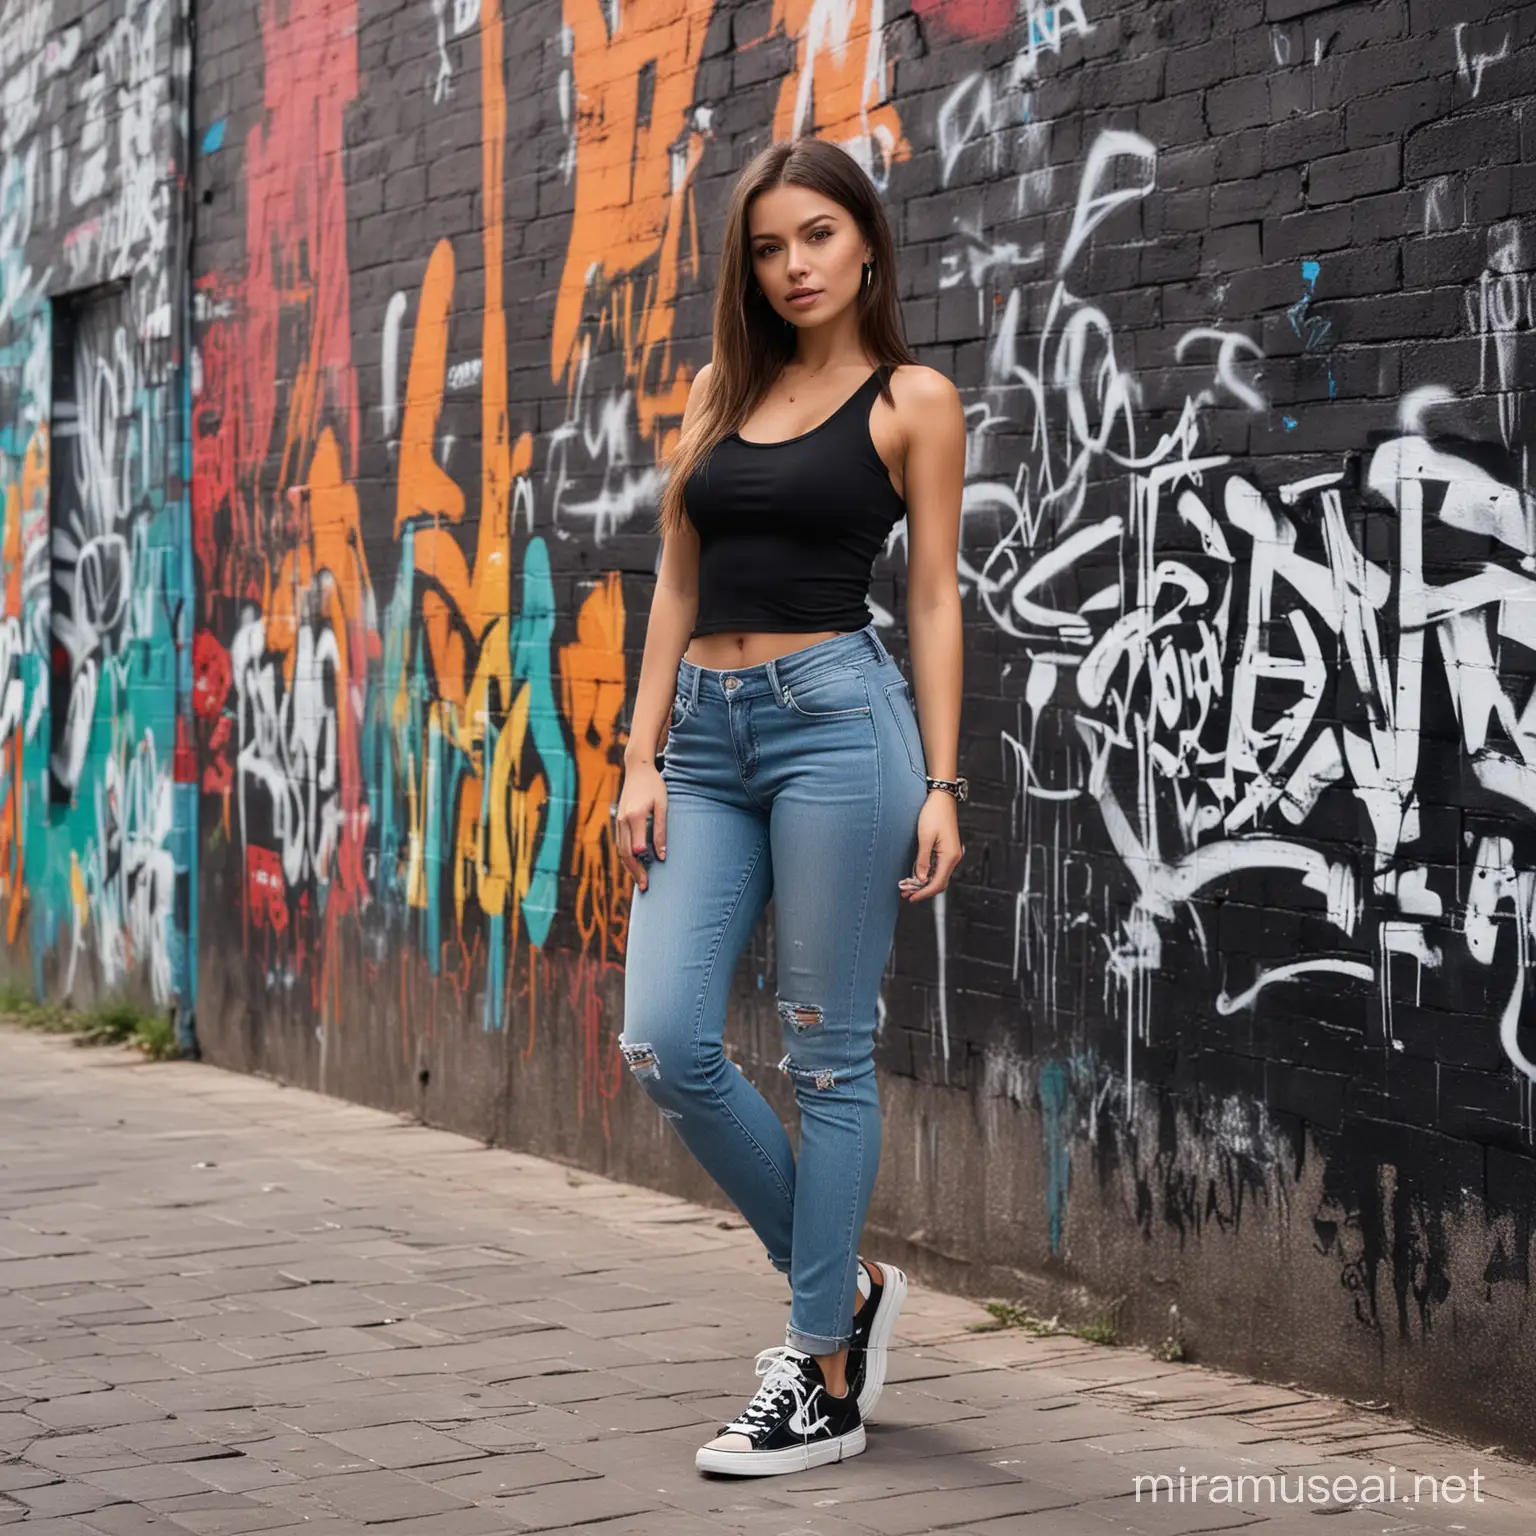 Chic Streetwear Fashion Model Poses Against Colorful Graffiti Wall